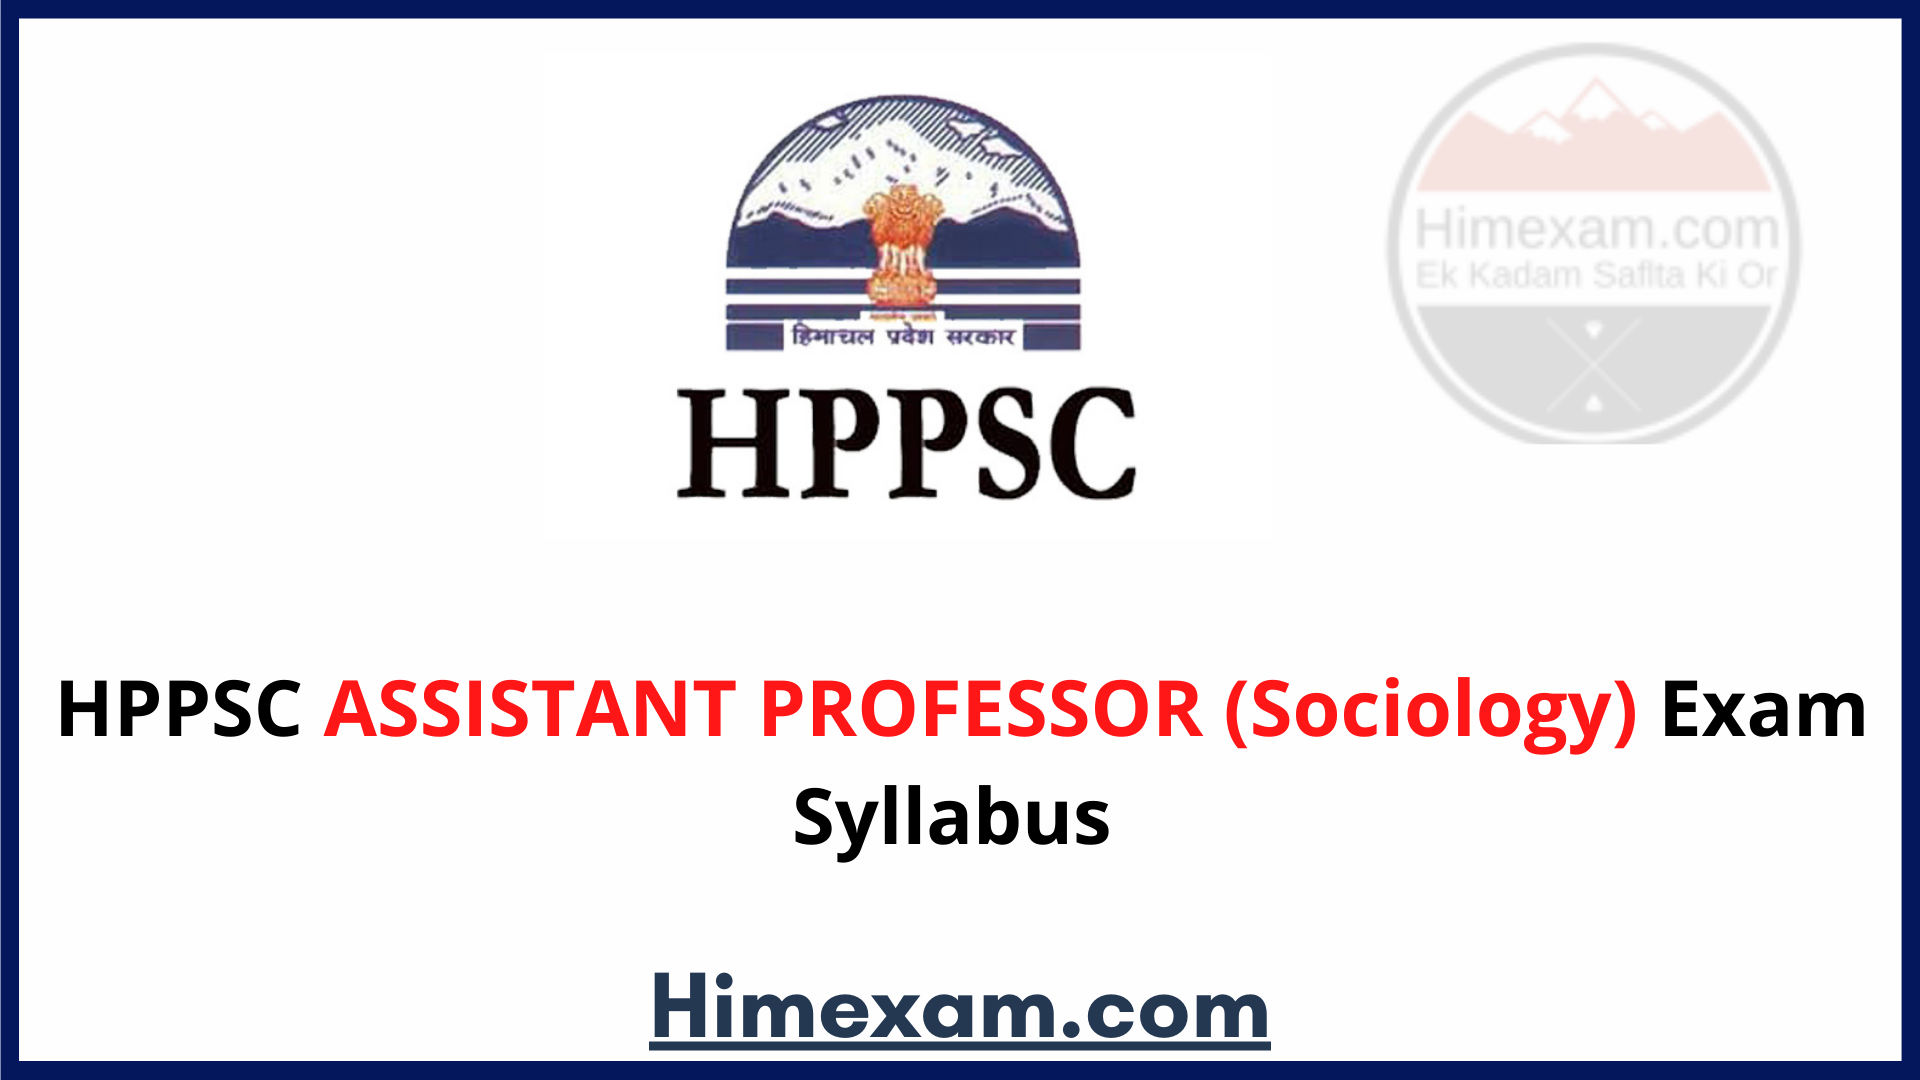 HPPSC ASSISTANT PROFESSOR (Sociology) Exam Syllabus